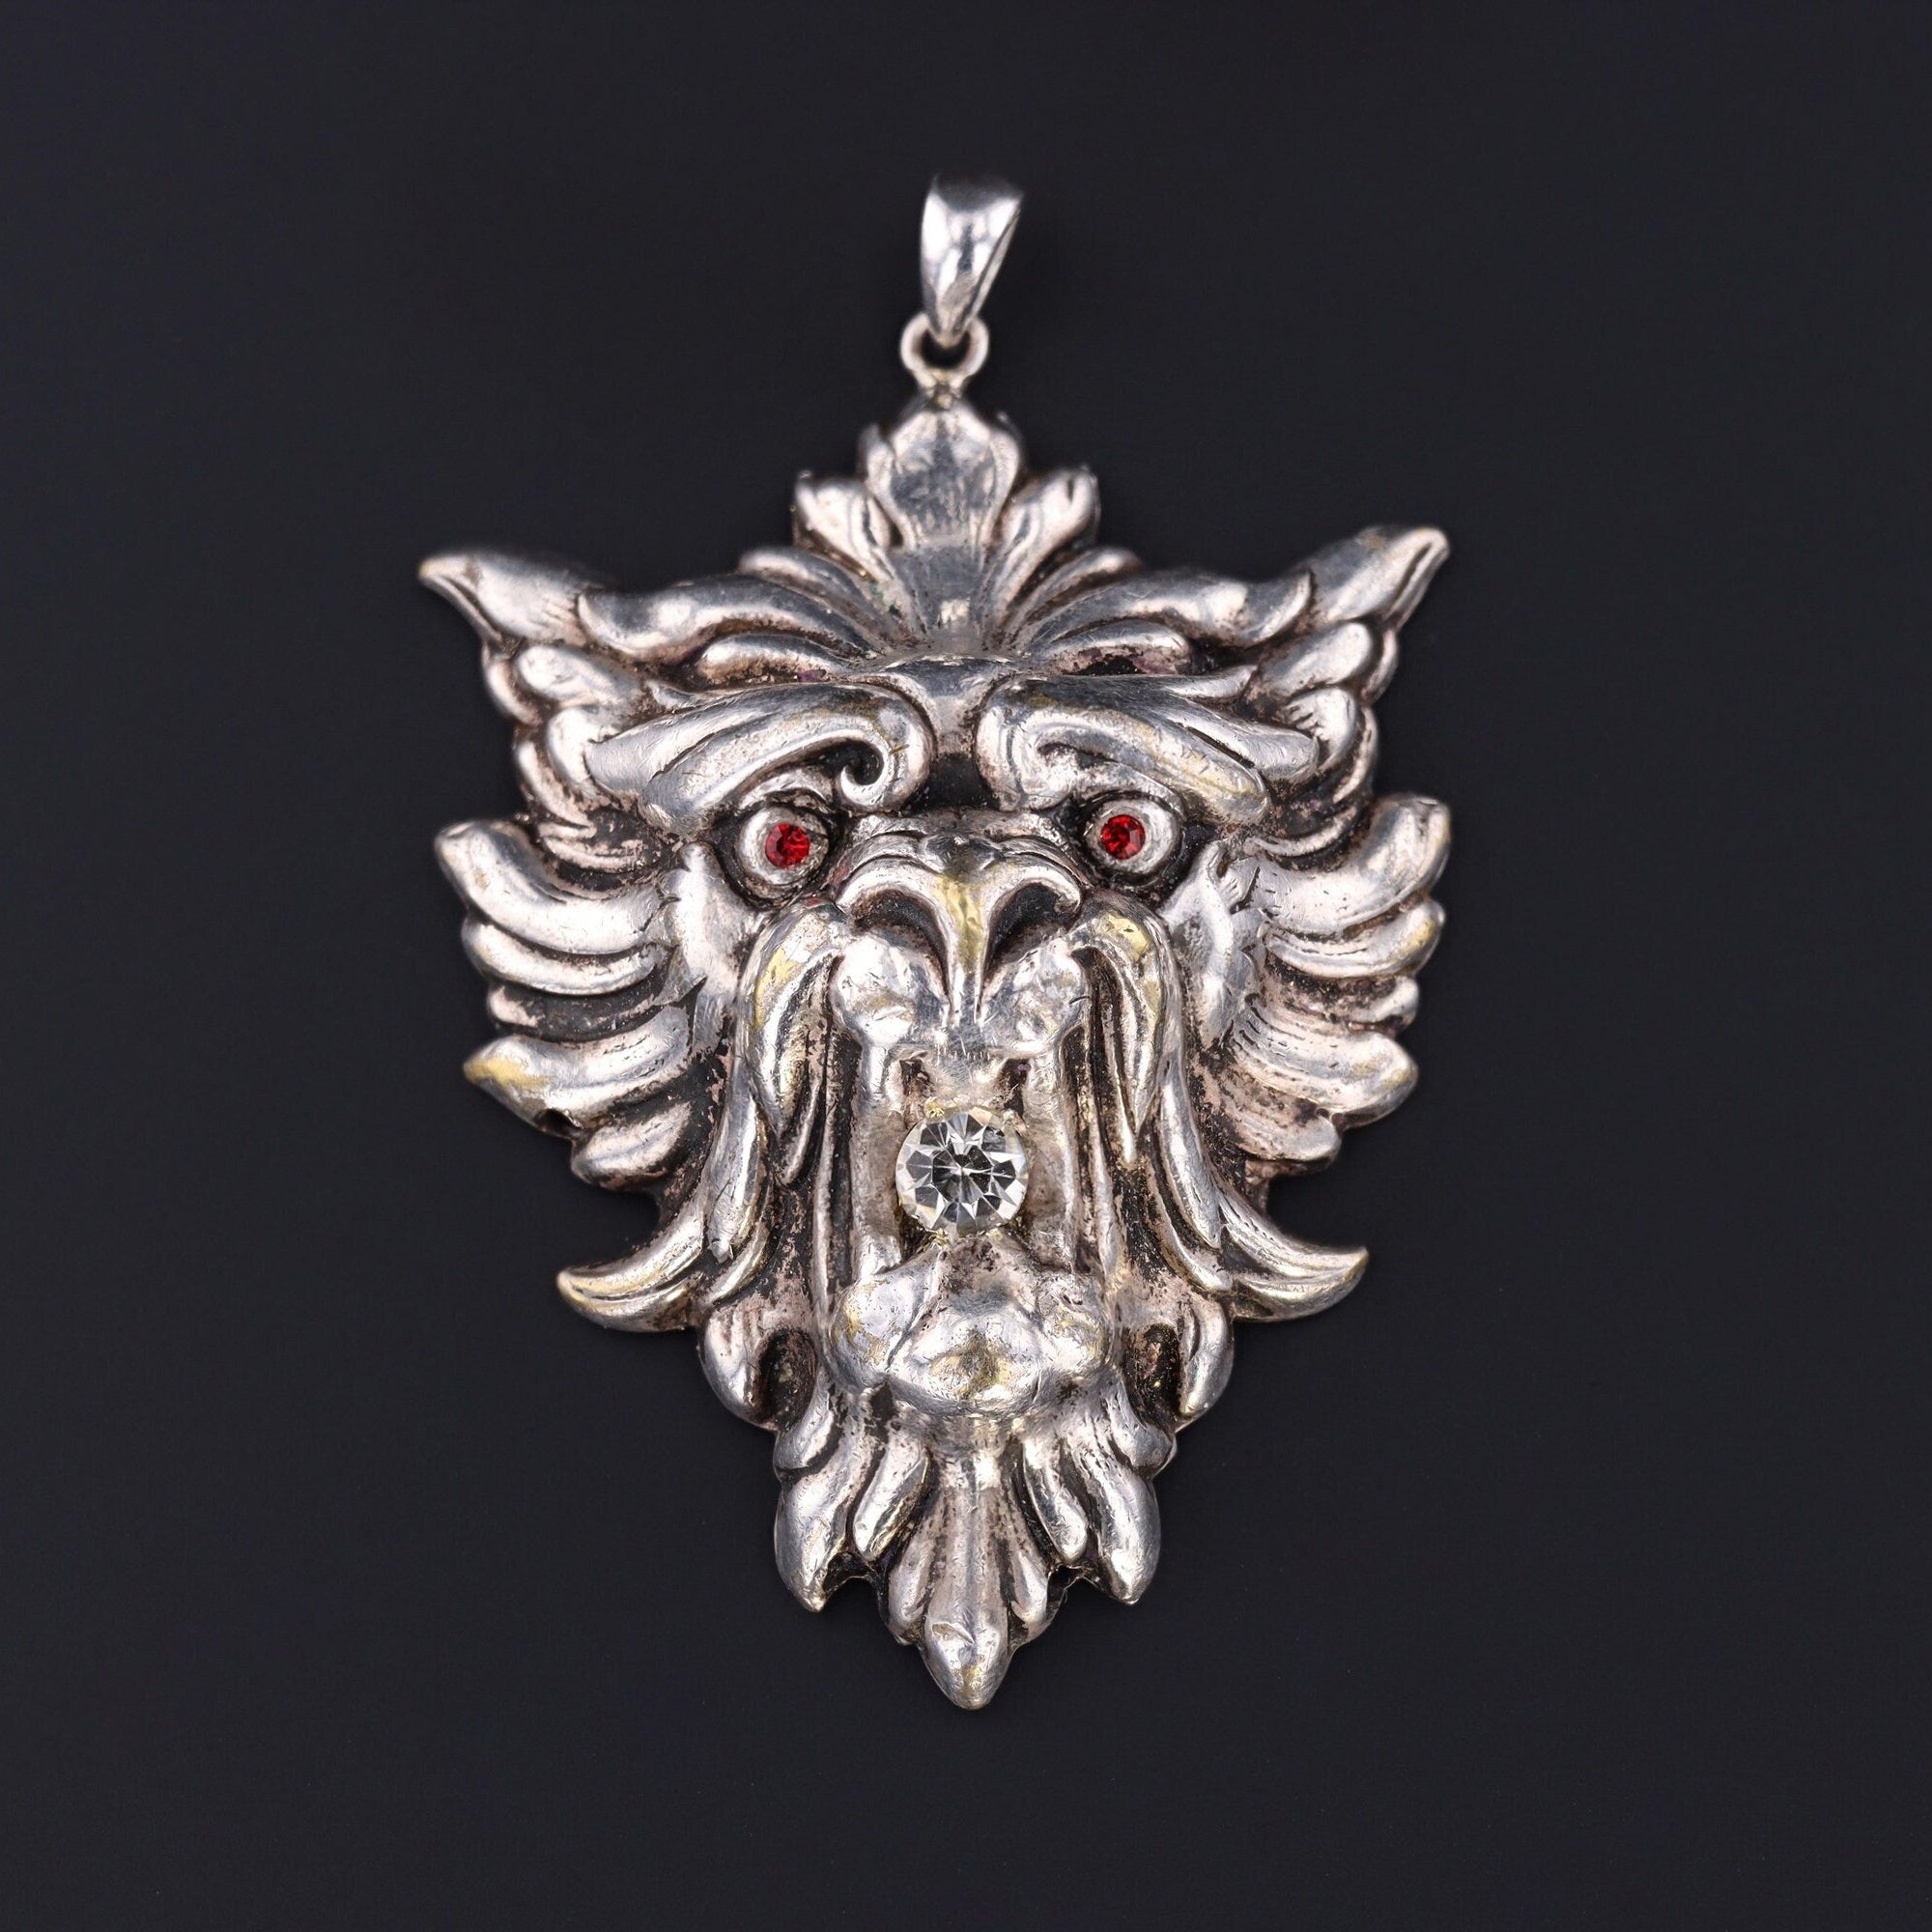 Gargoyle Pendant | Silver Plated Pendant 